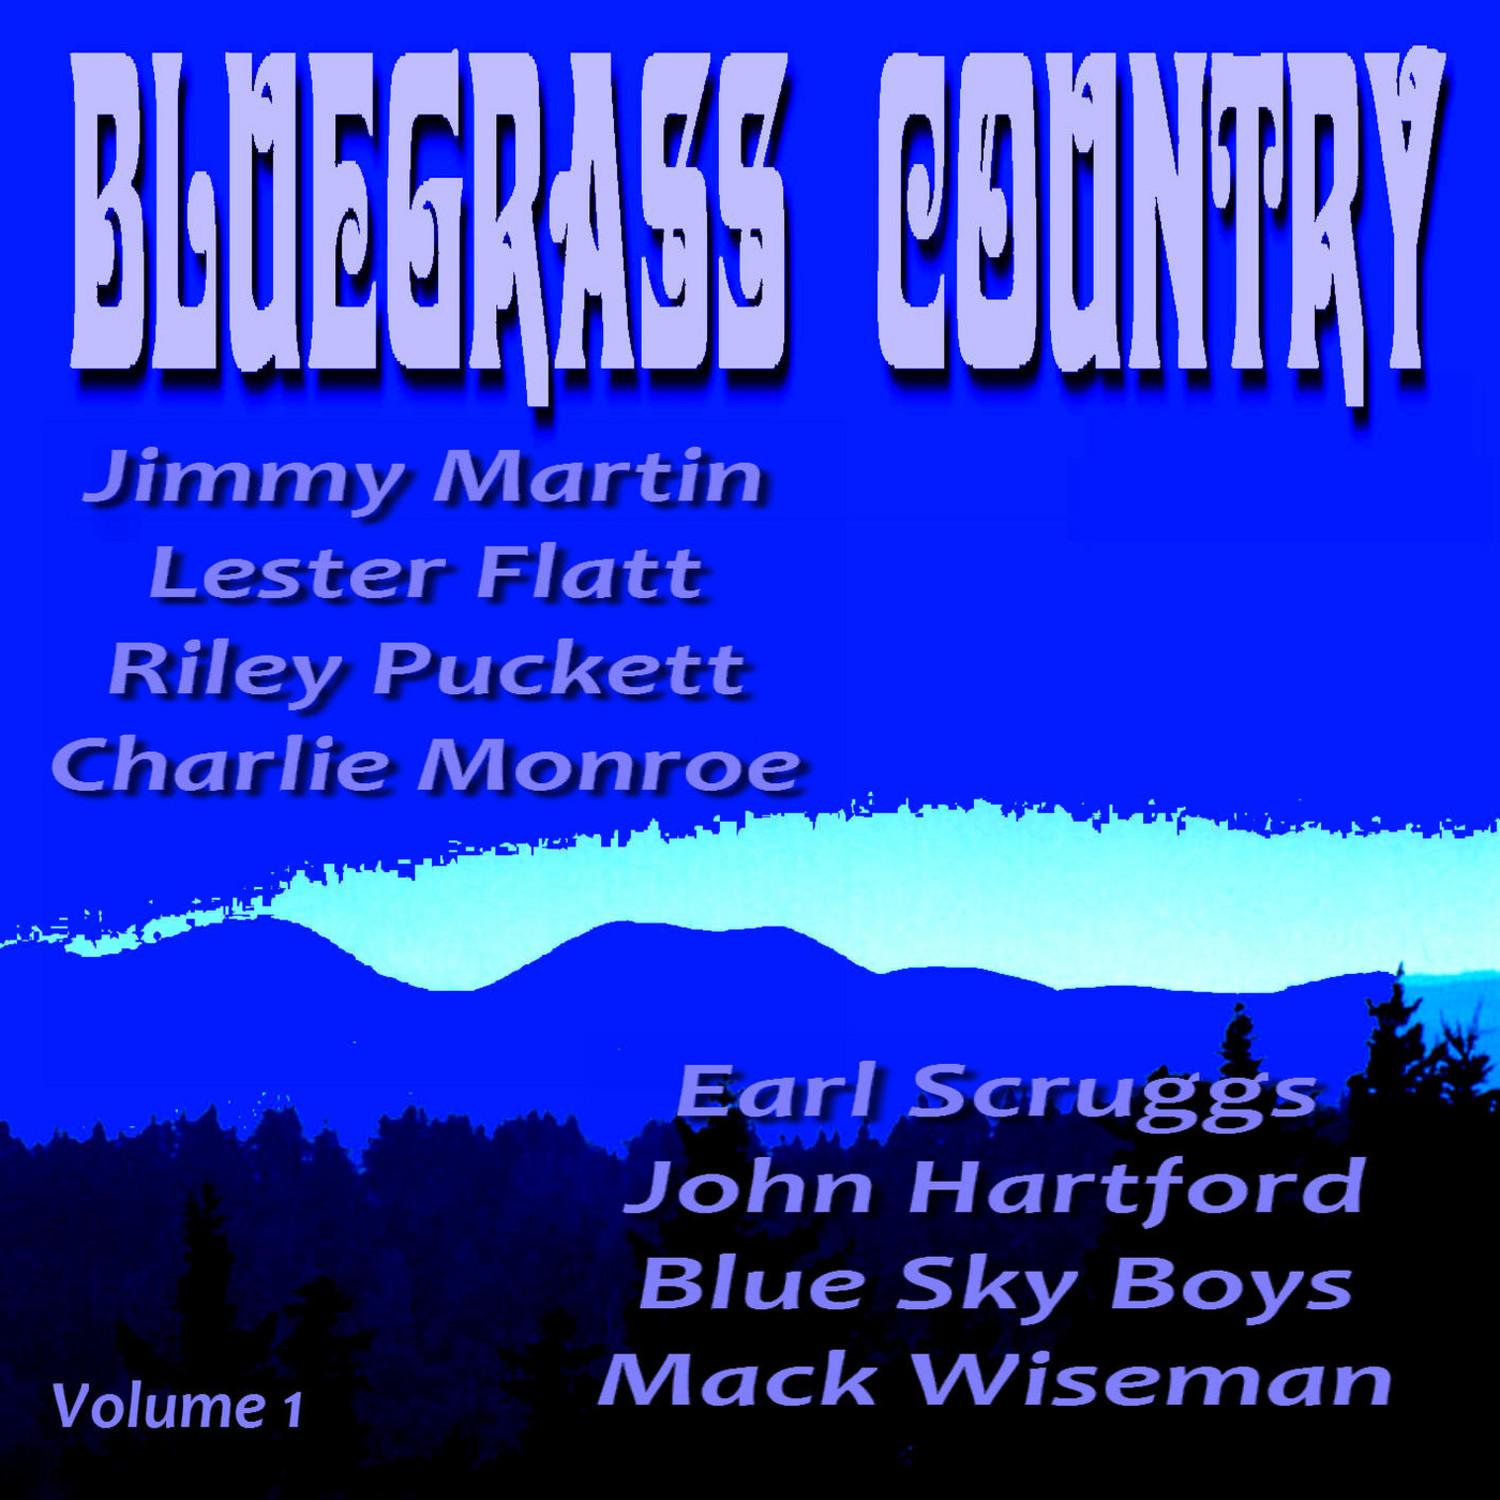 Blue Grass Country Vol. 1